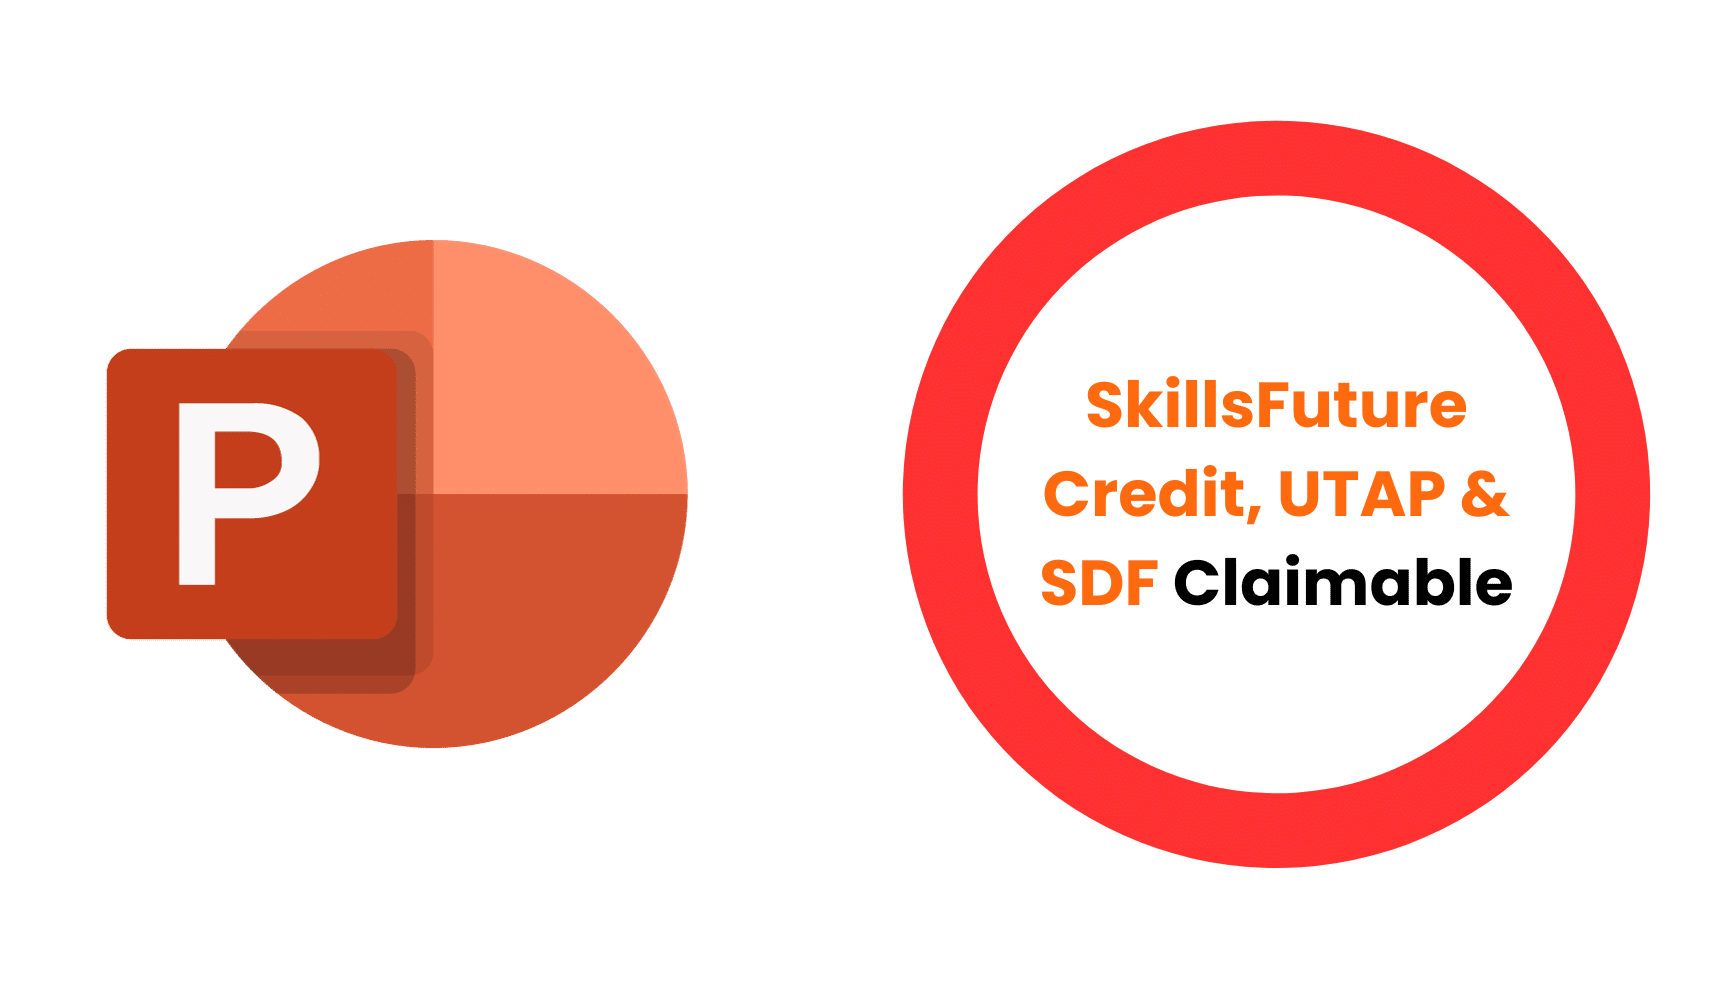 Microsoft Powerpoint Courses Singapore - SkillsFuture Credit, UTAP & SDF Claimable